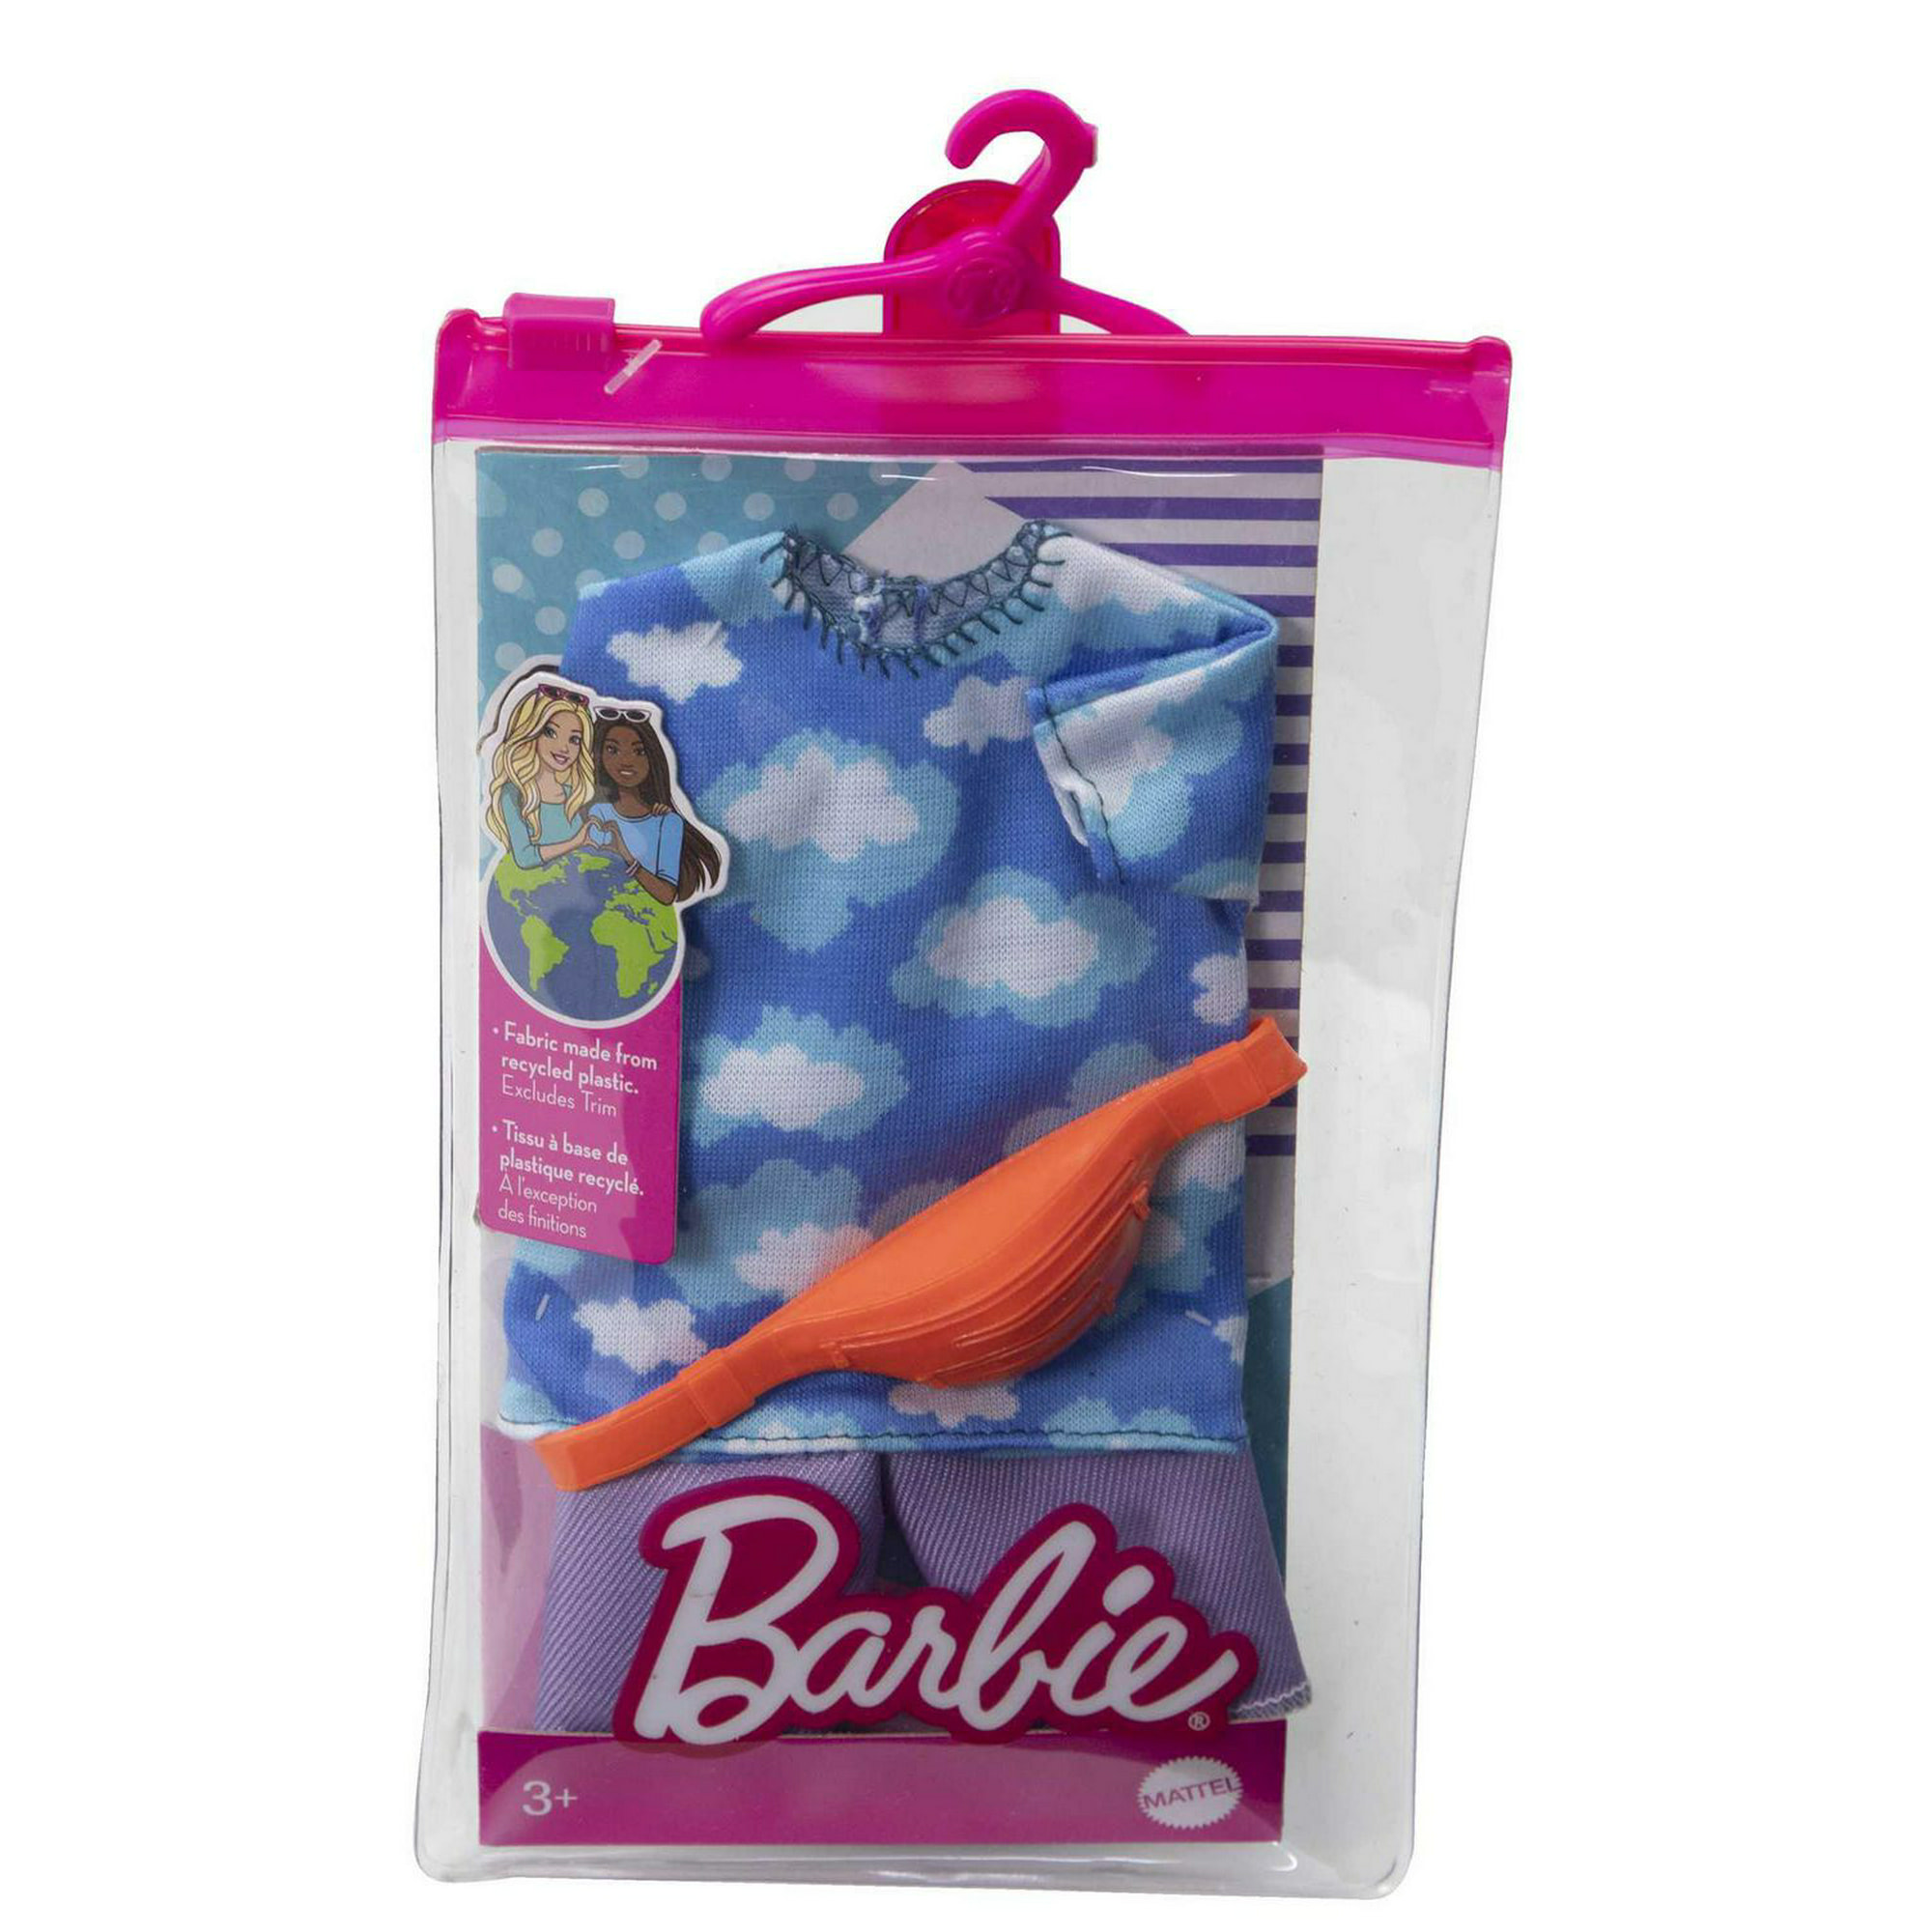 Barbie Fashions Pack: Ken Doll Clothes, Cloud Shirt, Shorts, Fanny